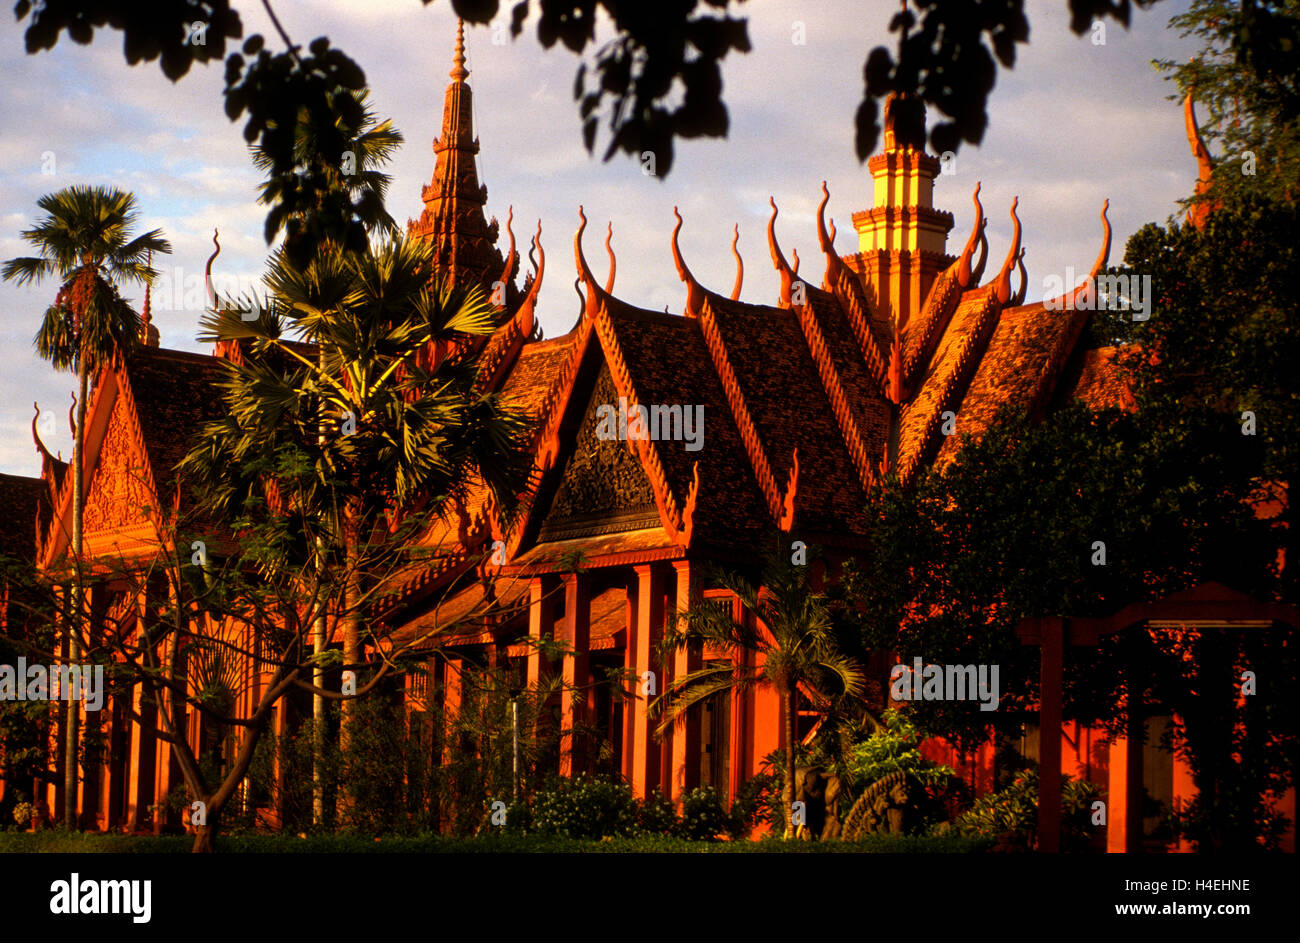 national arts museum, cambodia Stock Photo